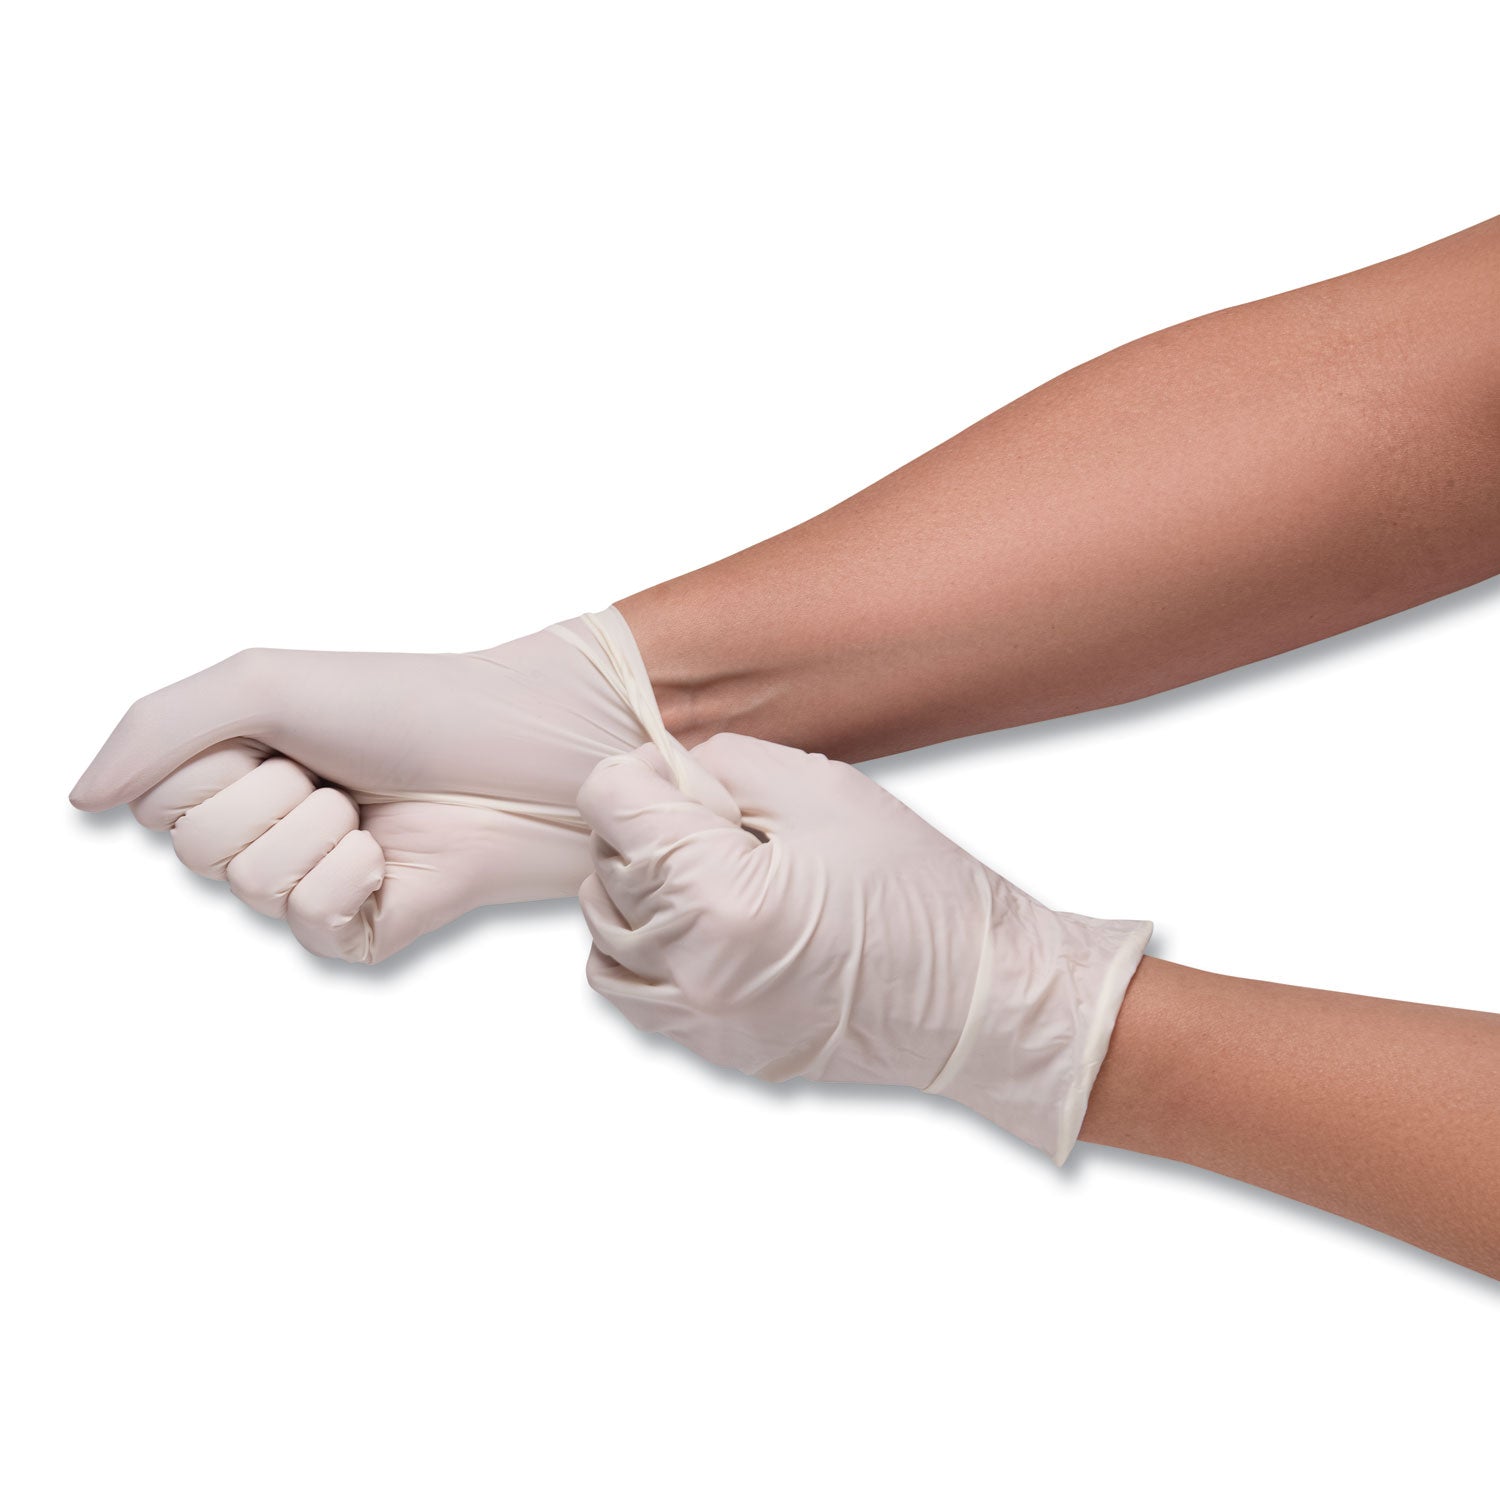 stretch-vinyl-examination-gloves-cream-medium-100-box_sezscvnp103bx - 3